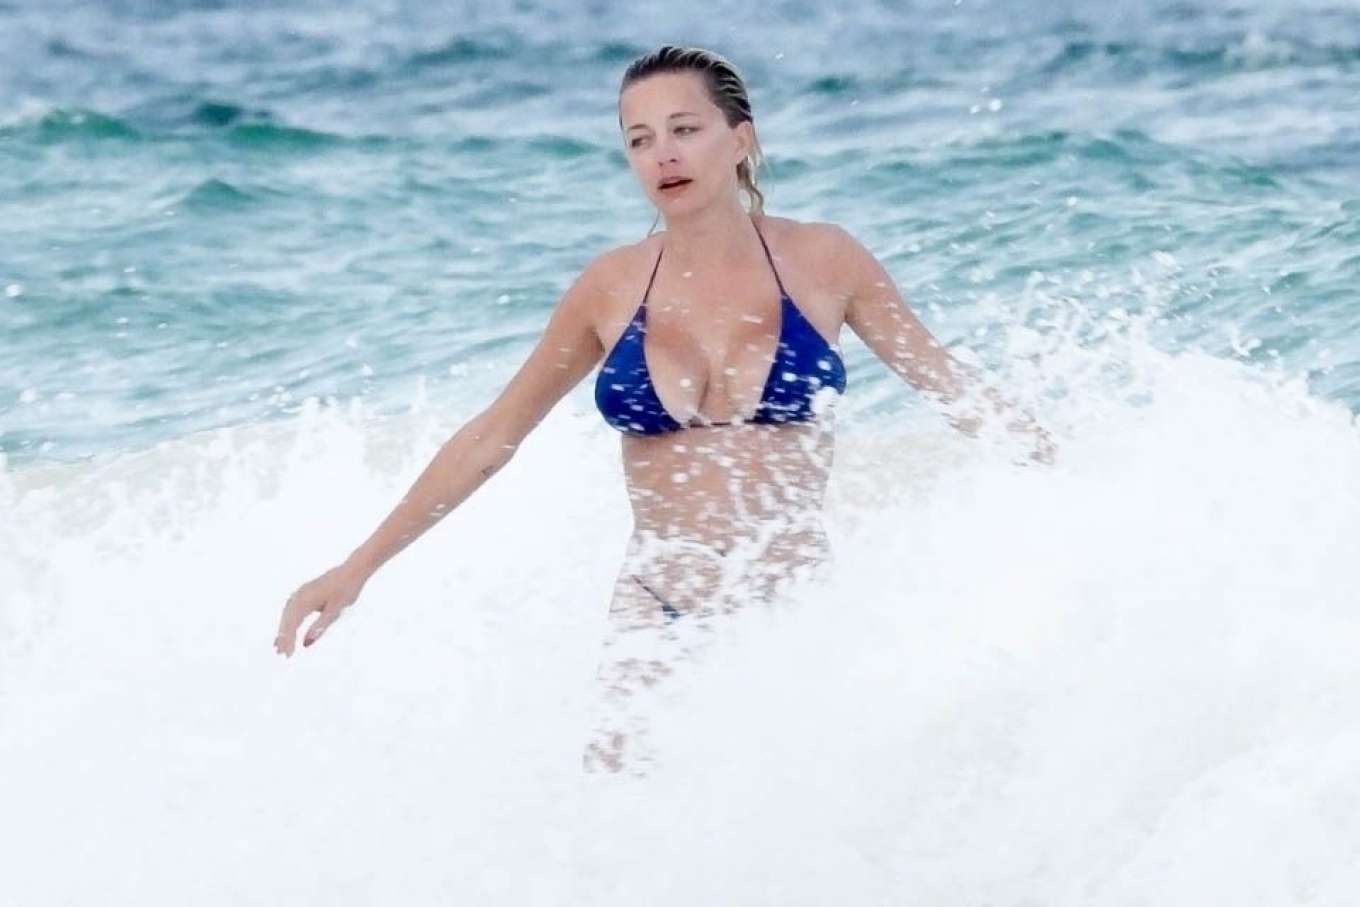 Caroline Vreeland In Blue Bikini Gotceleb